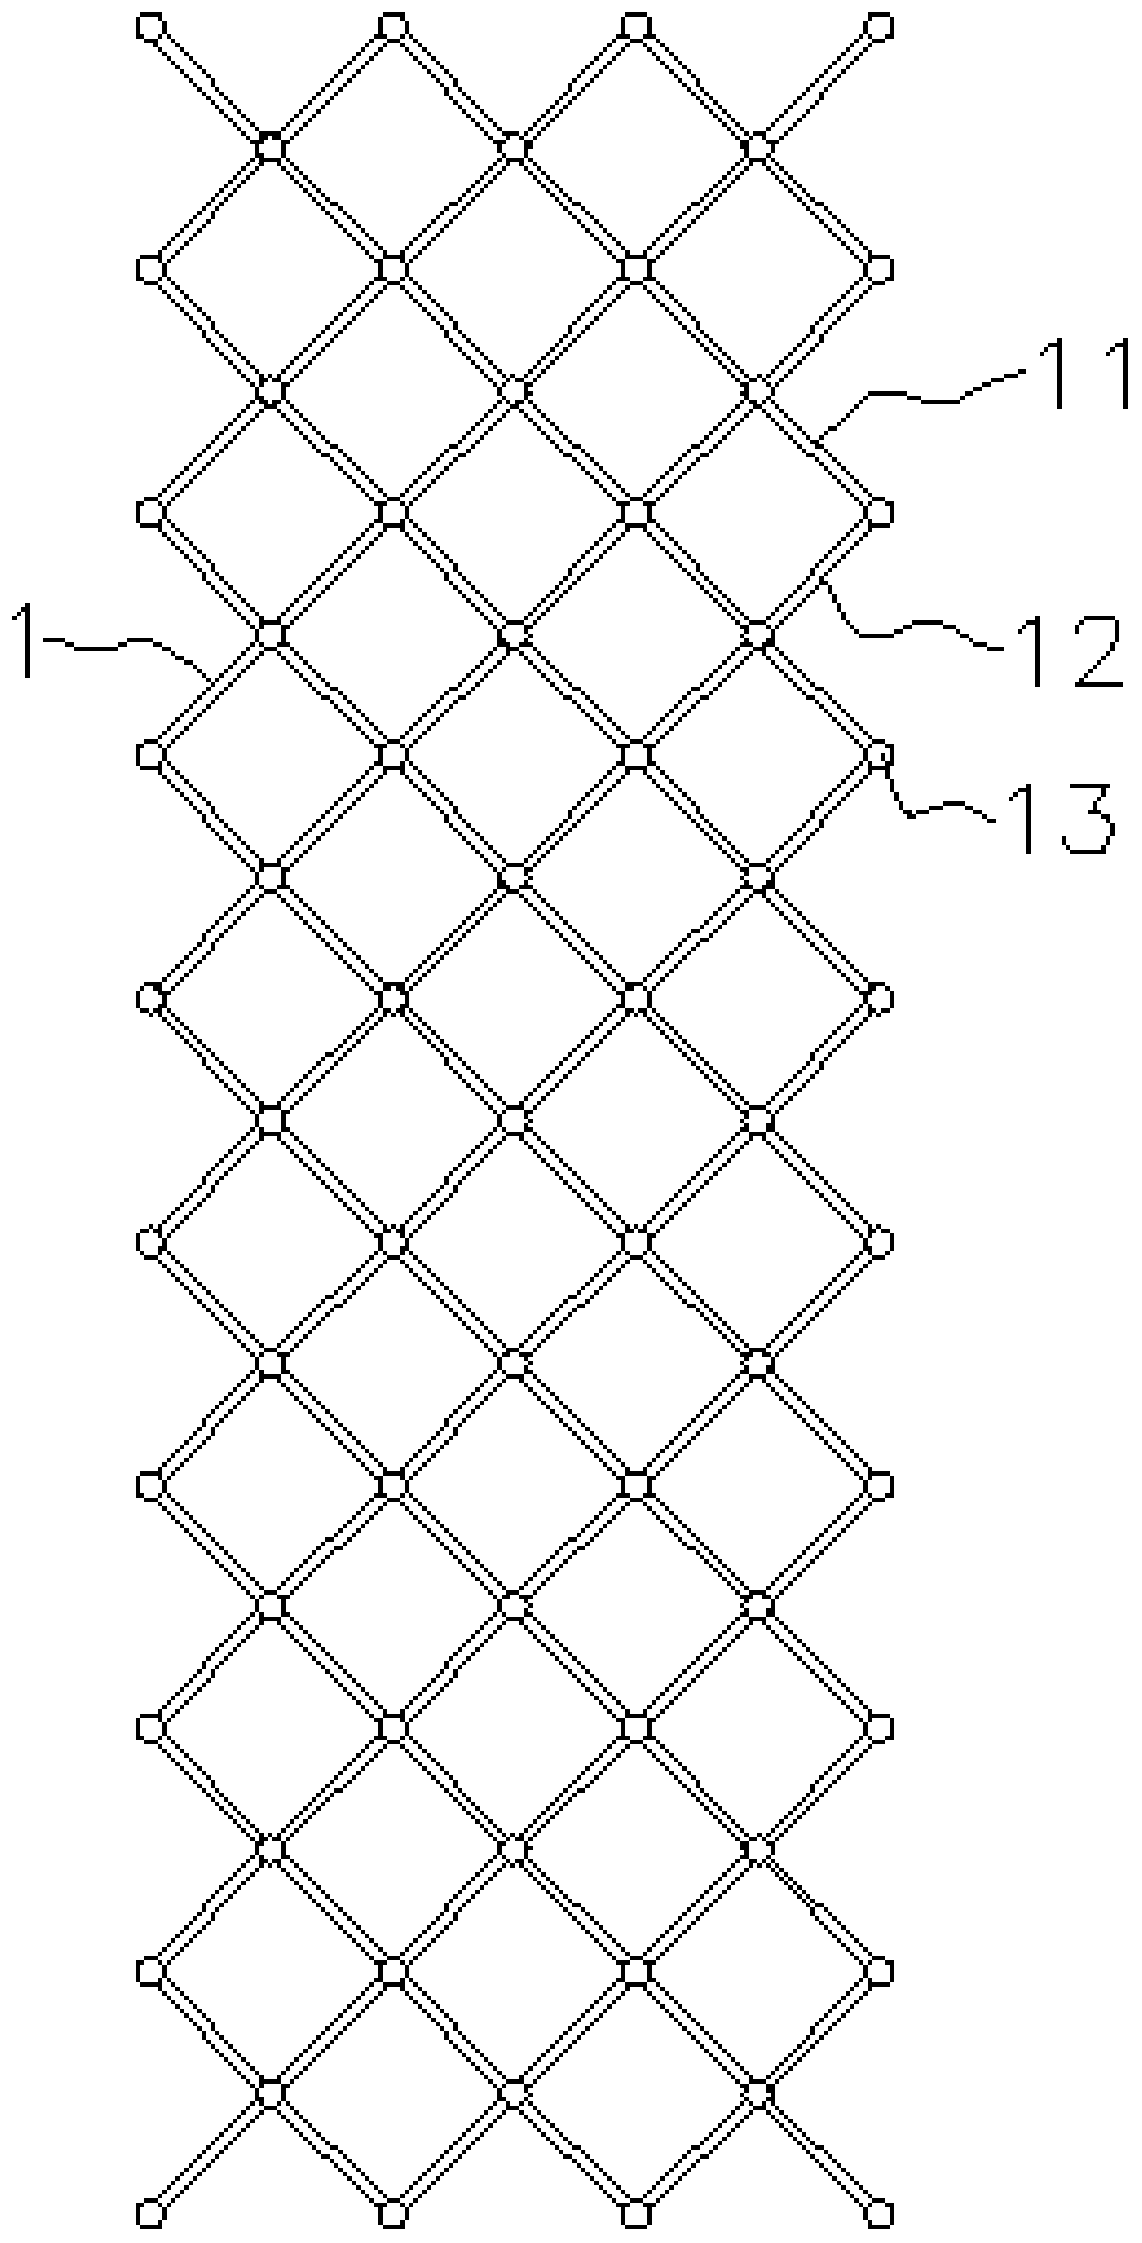 Grid soldering strip, method for manufacturing same, apparatus for manufacturing same, and imbricate component